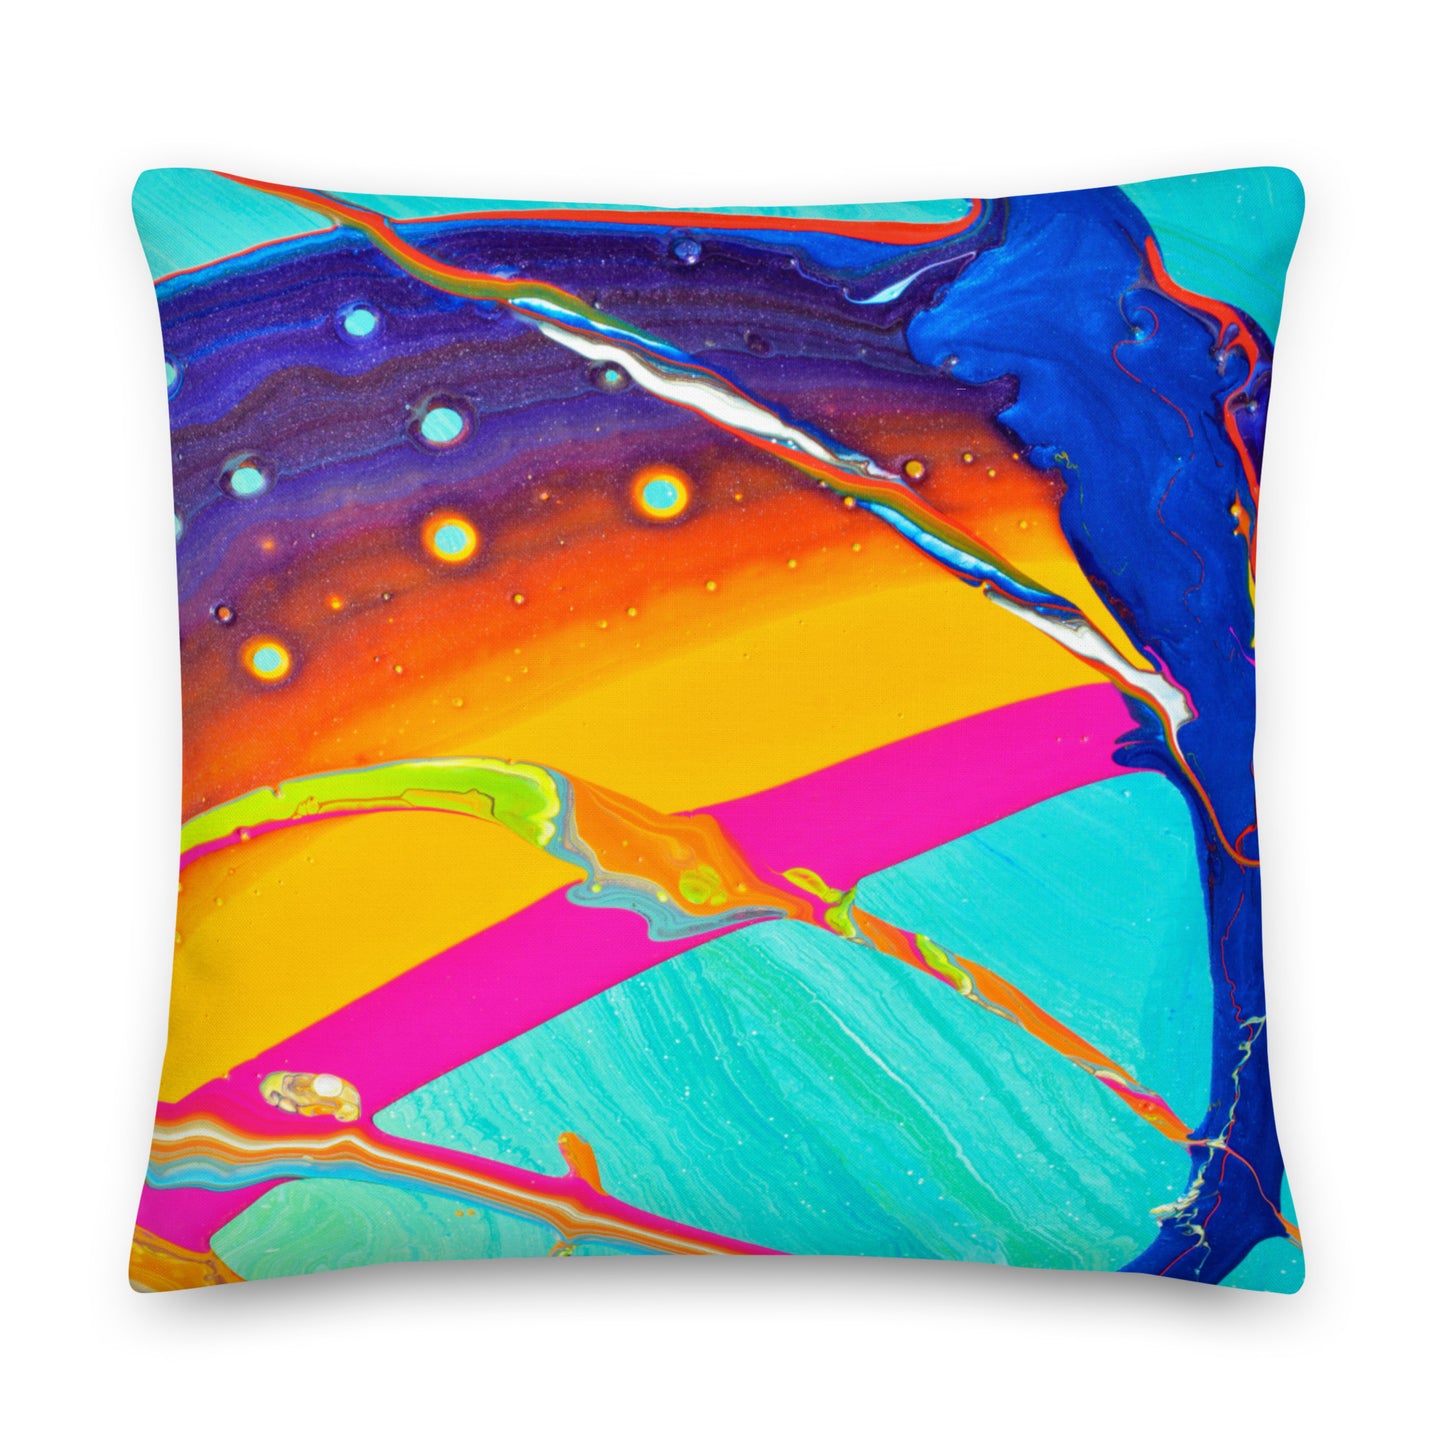 Travesseiro Premium - Design Arco-íris